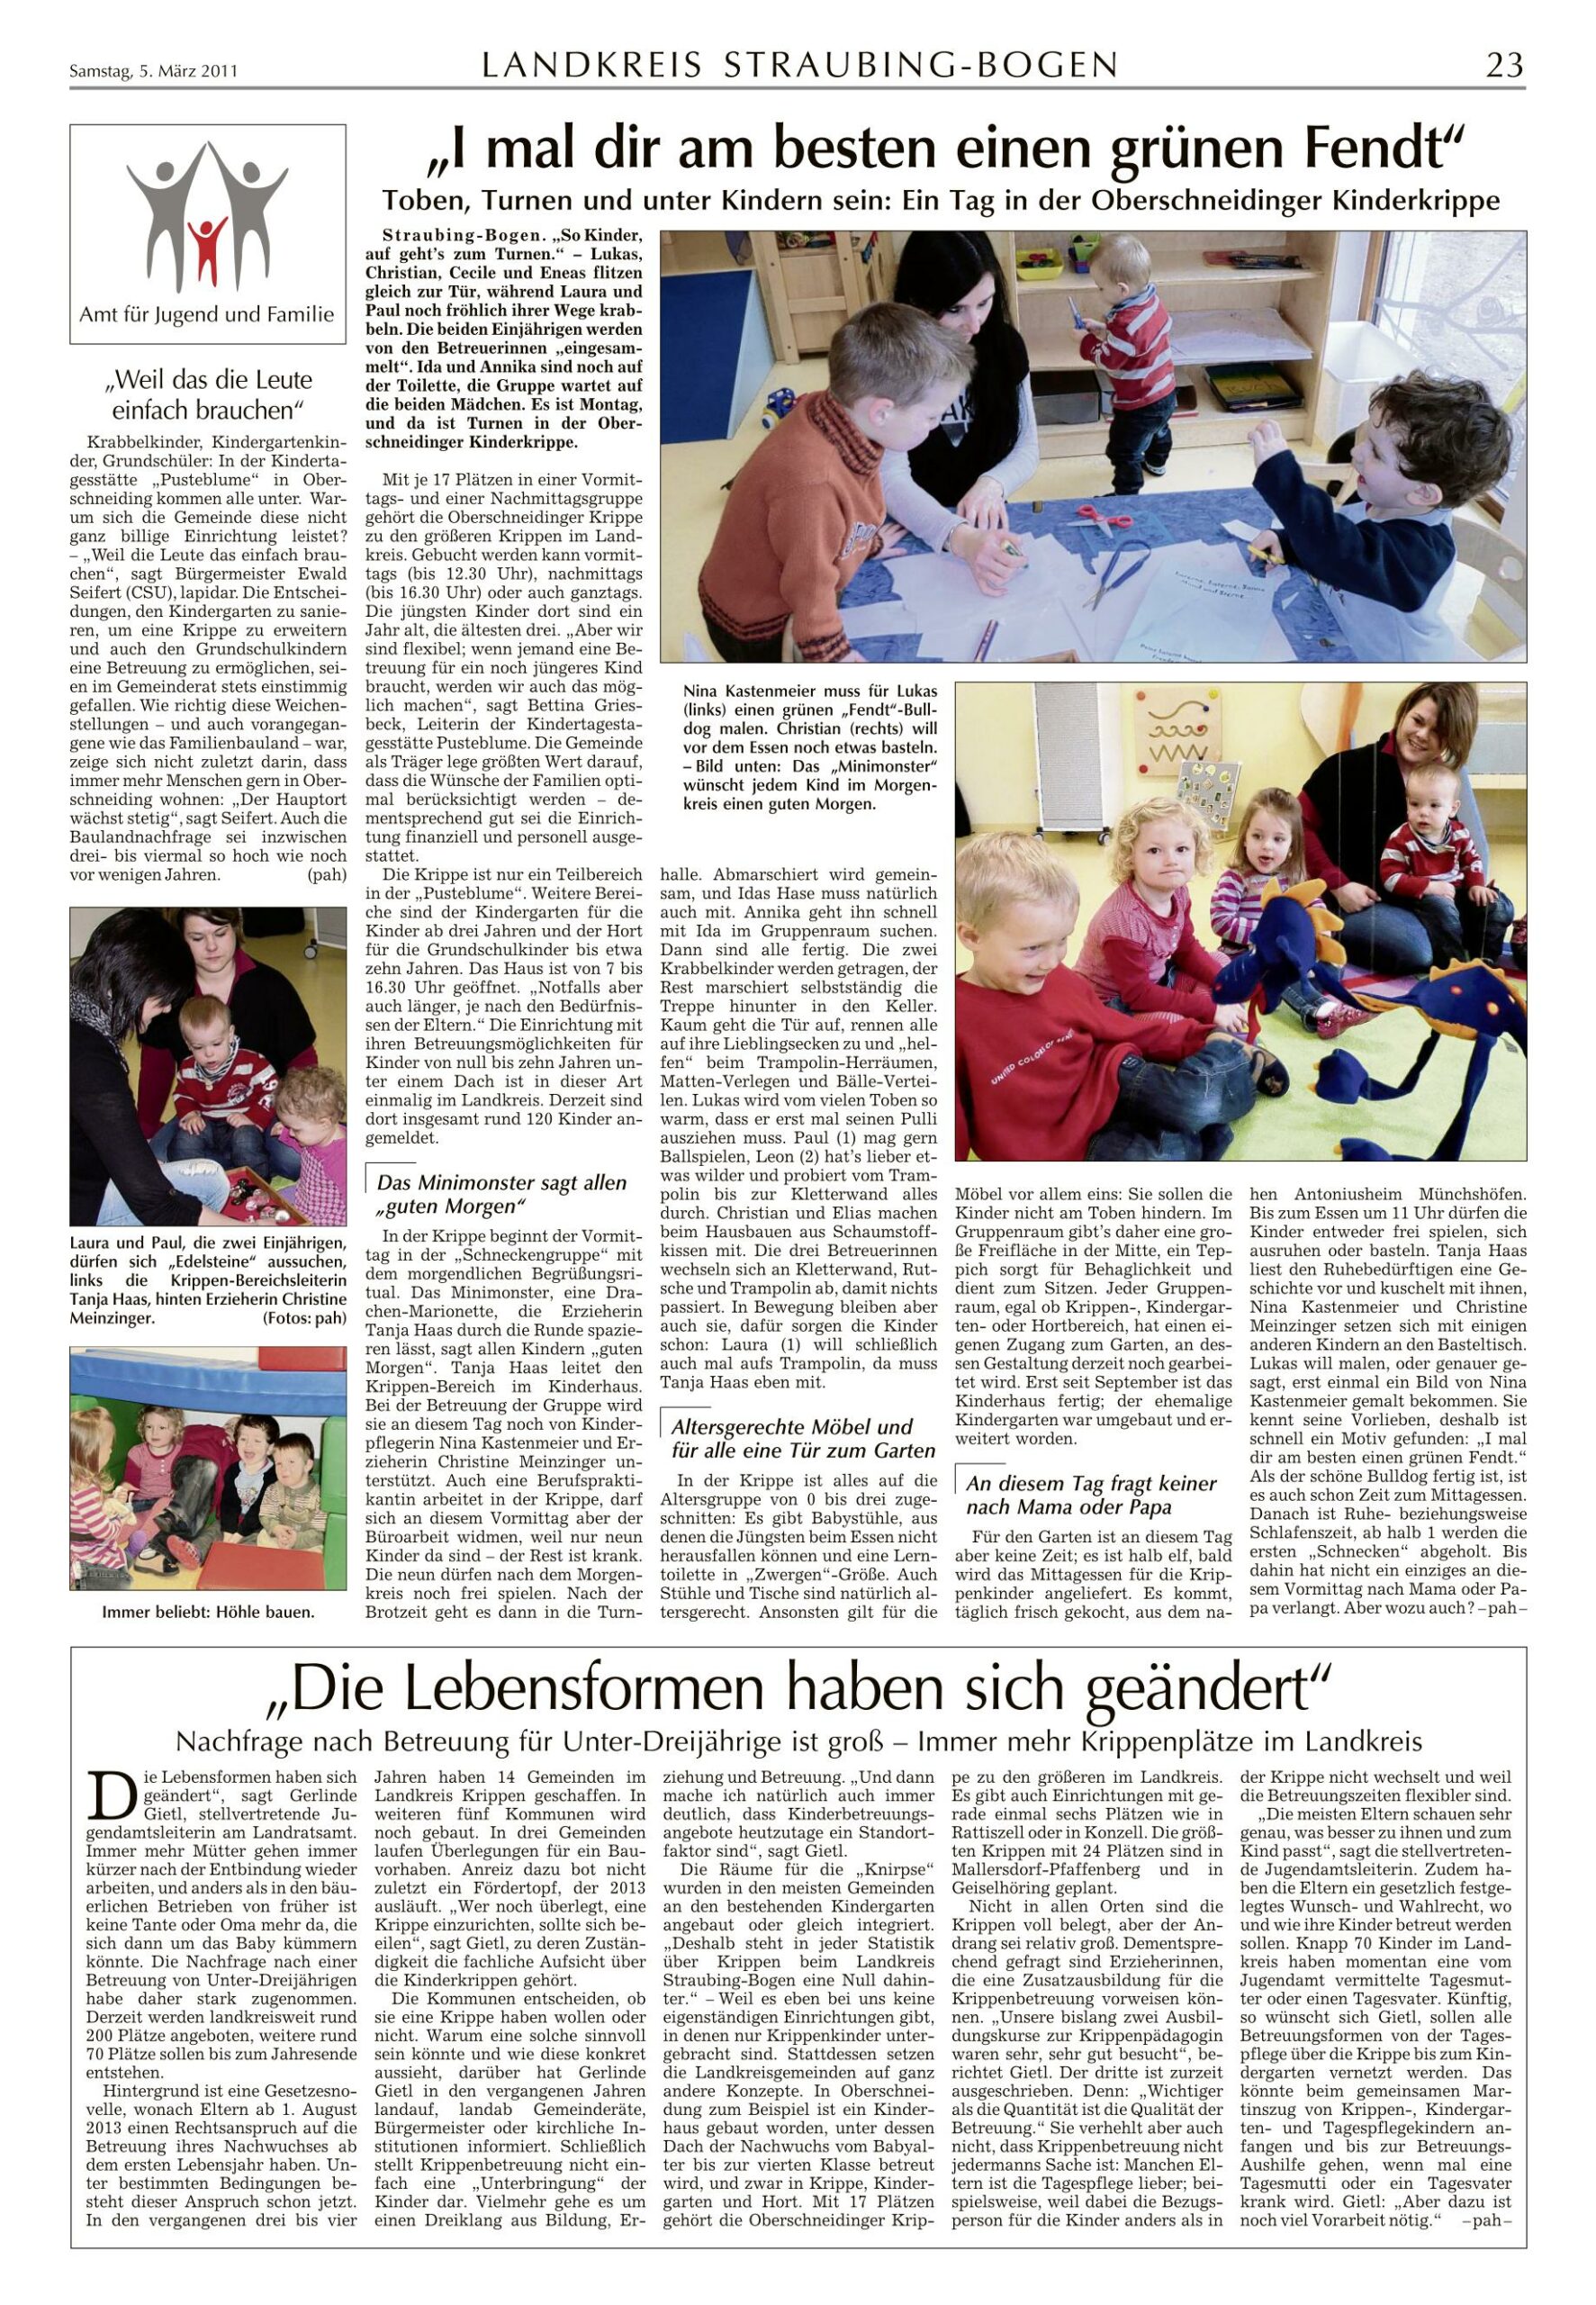 Bericht aus dem Straubinger Tagblatt